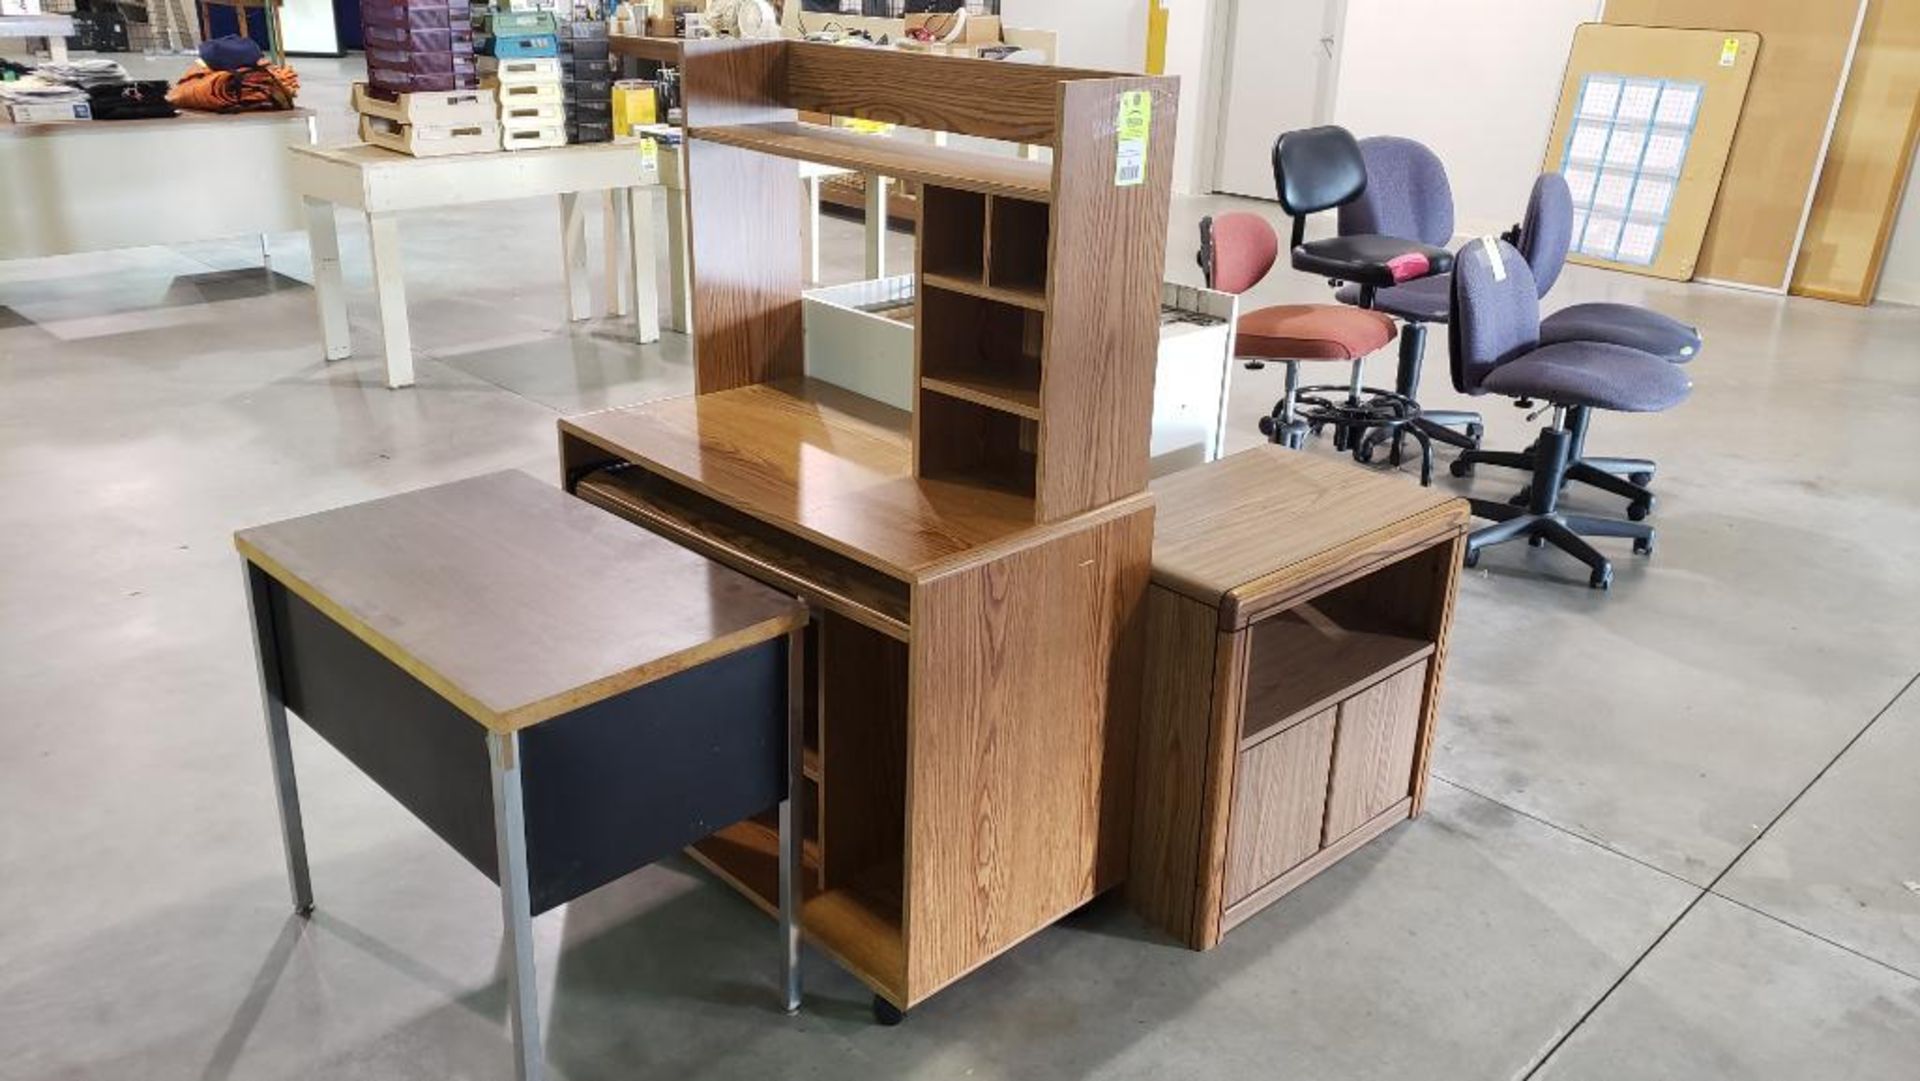 Qty 4 - Assorted desks and shelves.